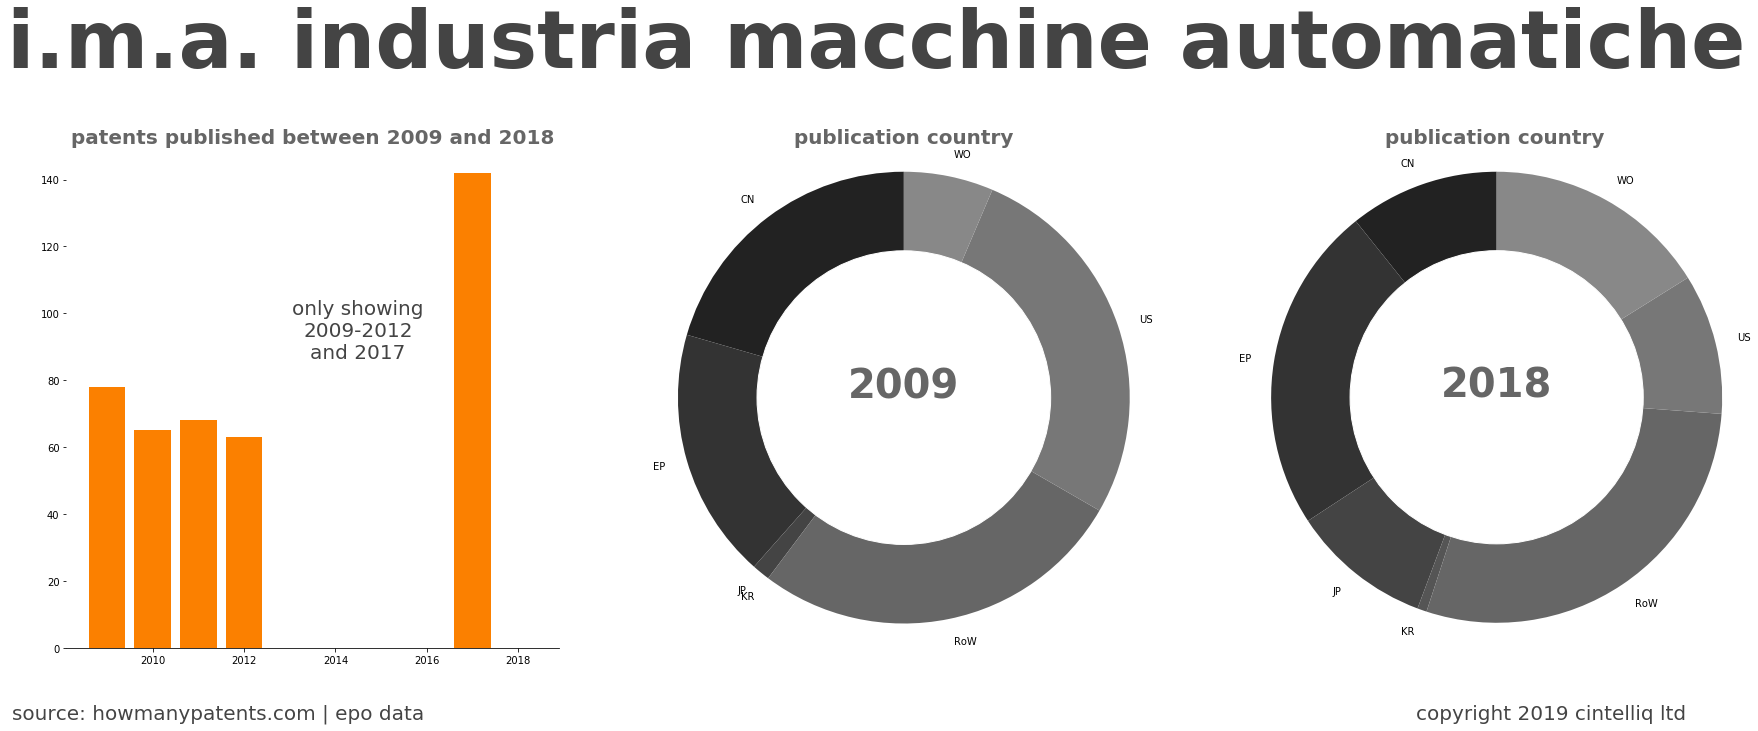 summary of patents for I.M.A. Industria Macchine Automatiche